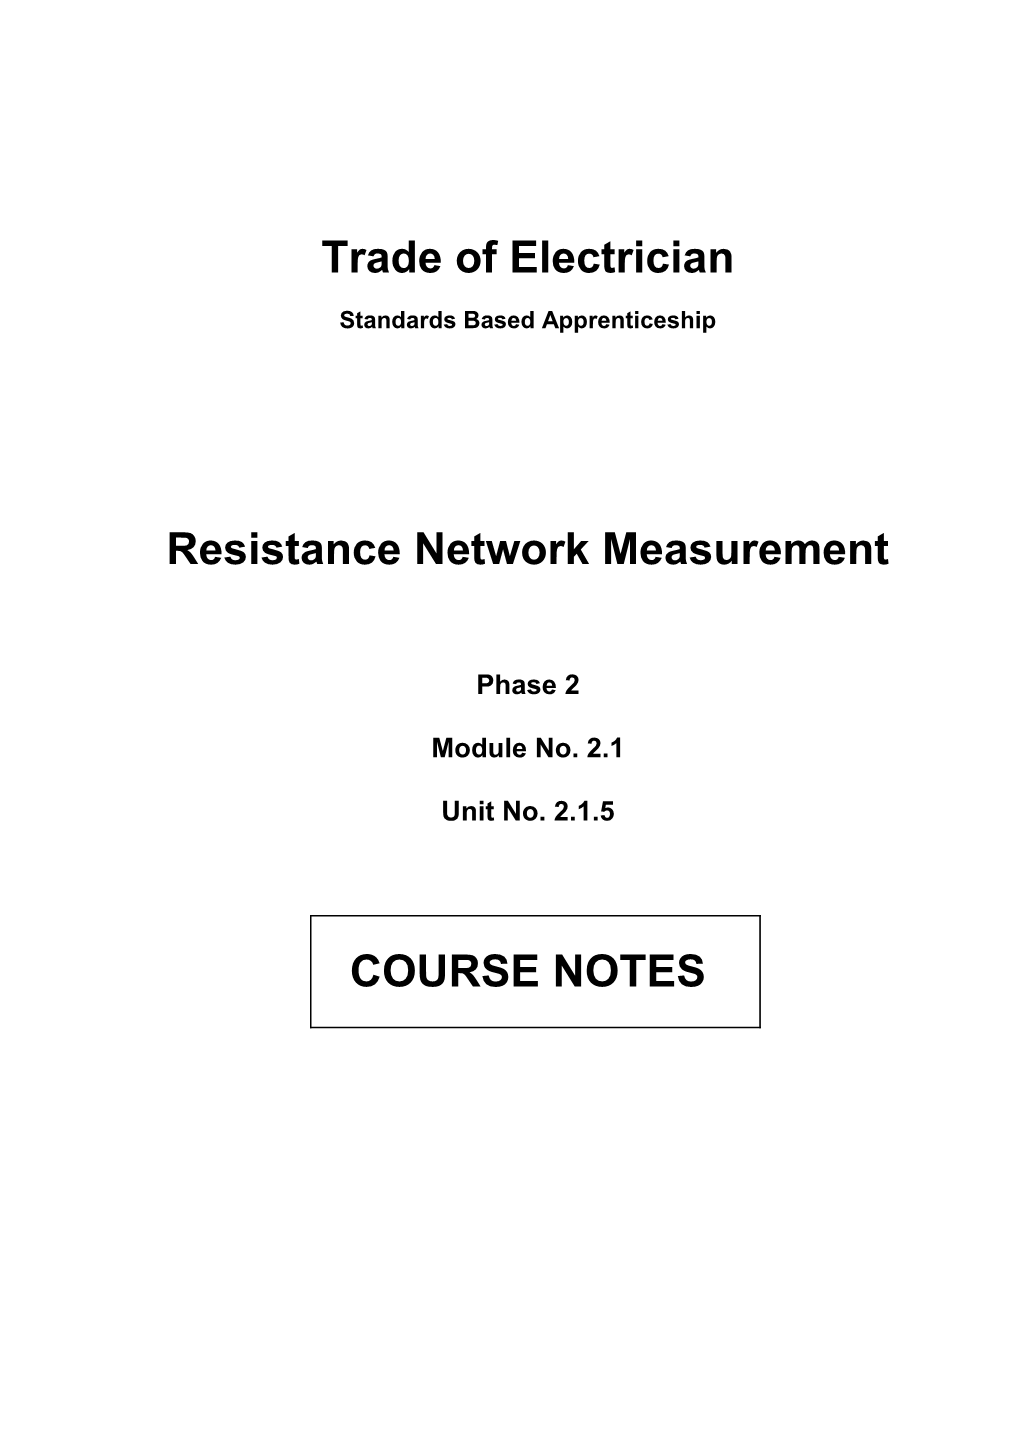 Resistance Network Measurement